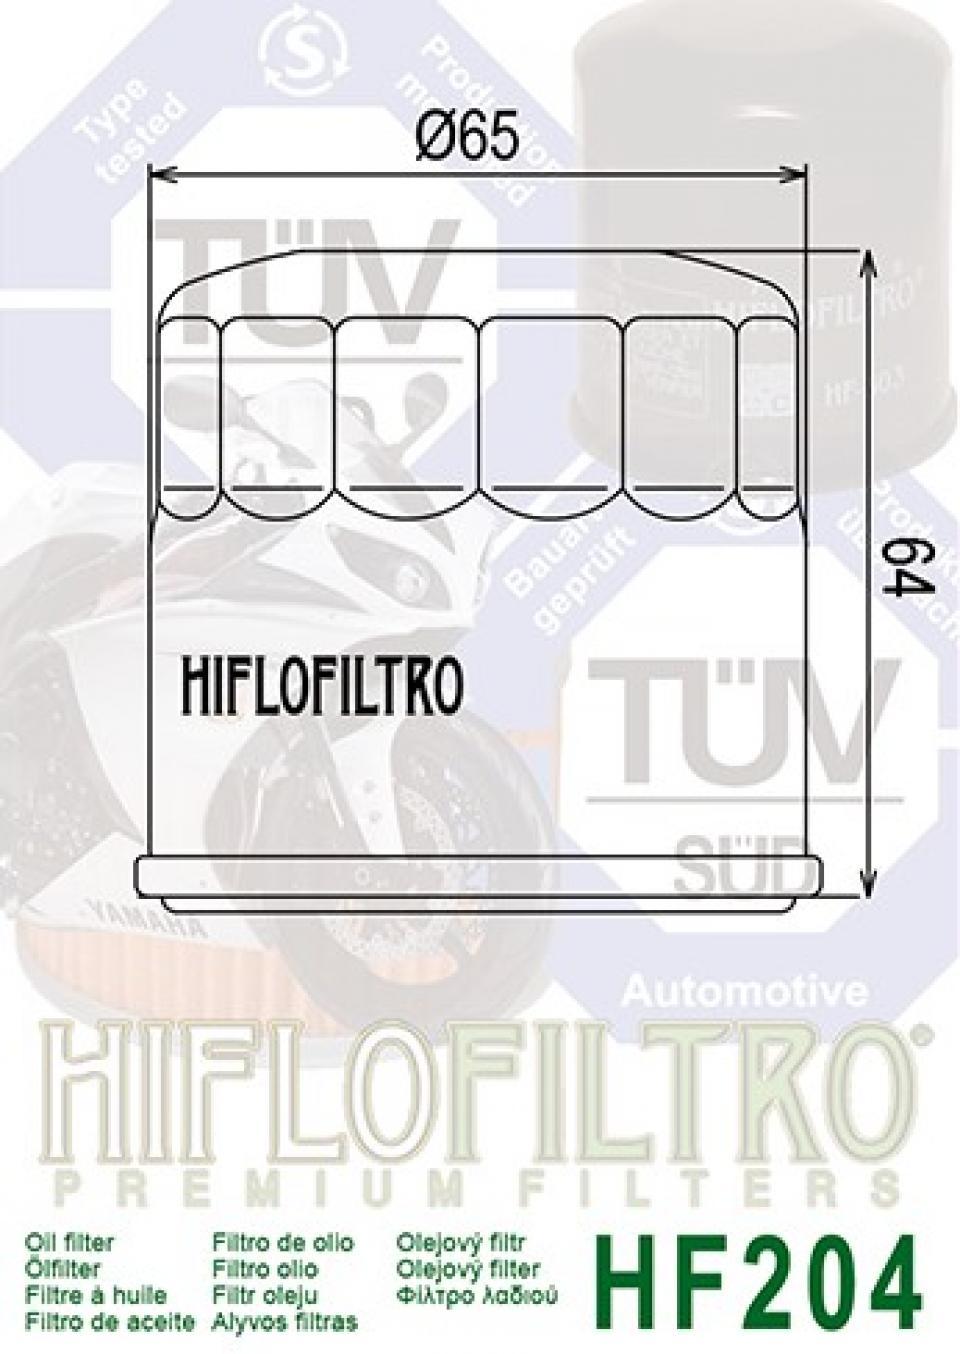 Filtre à huile Hiflofiltro pour Moto Honda 900 CBR 2000 à 2002 HF204 Neuf